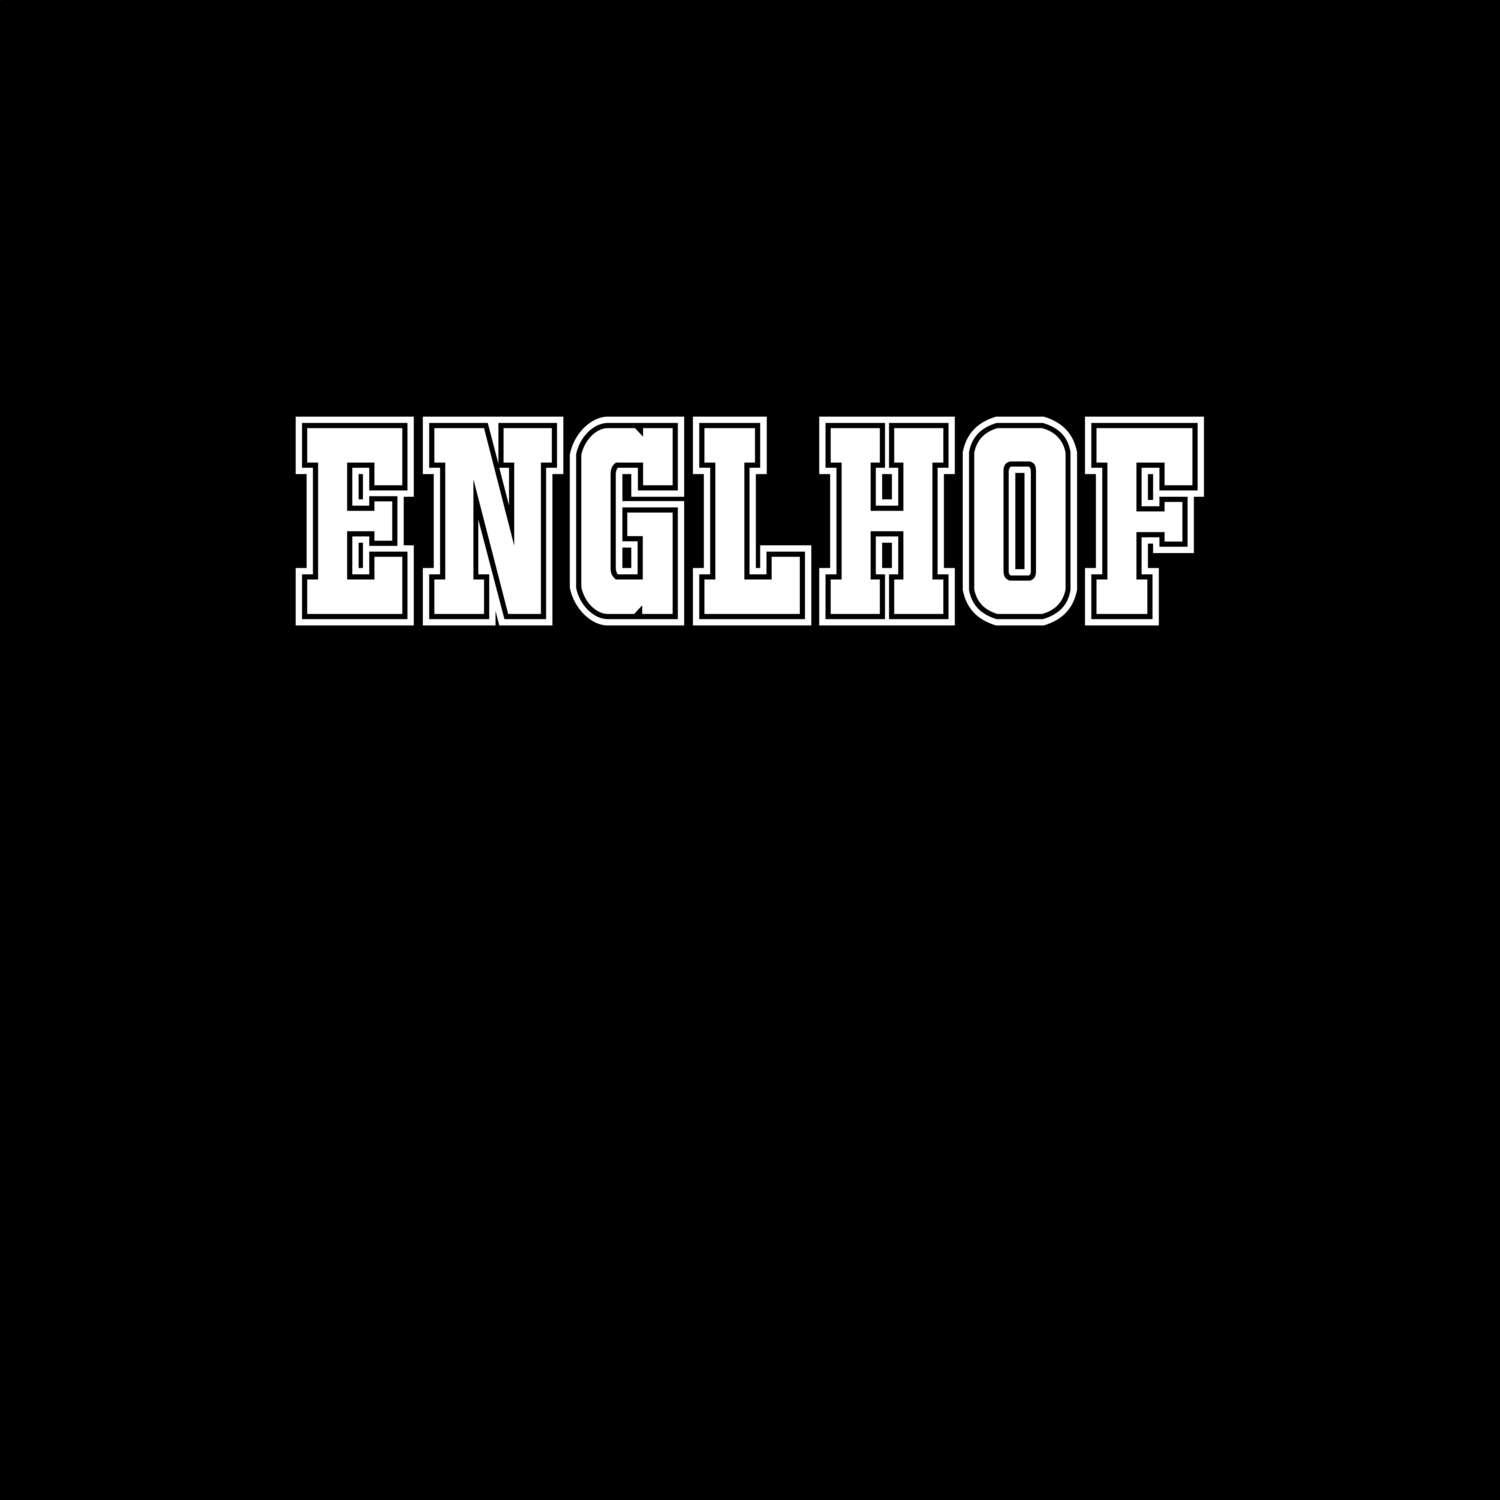 Englhof T-Shirt »Classic«